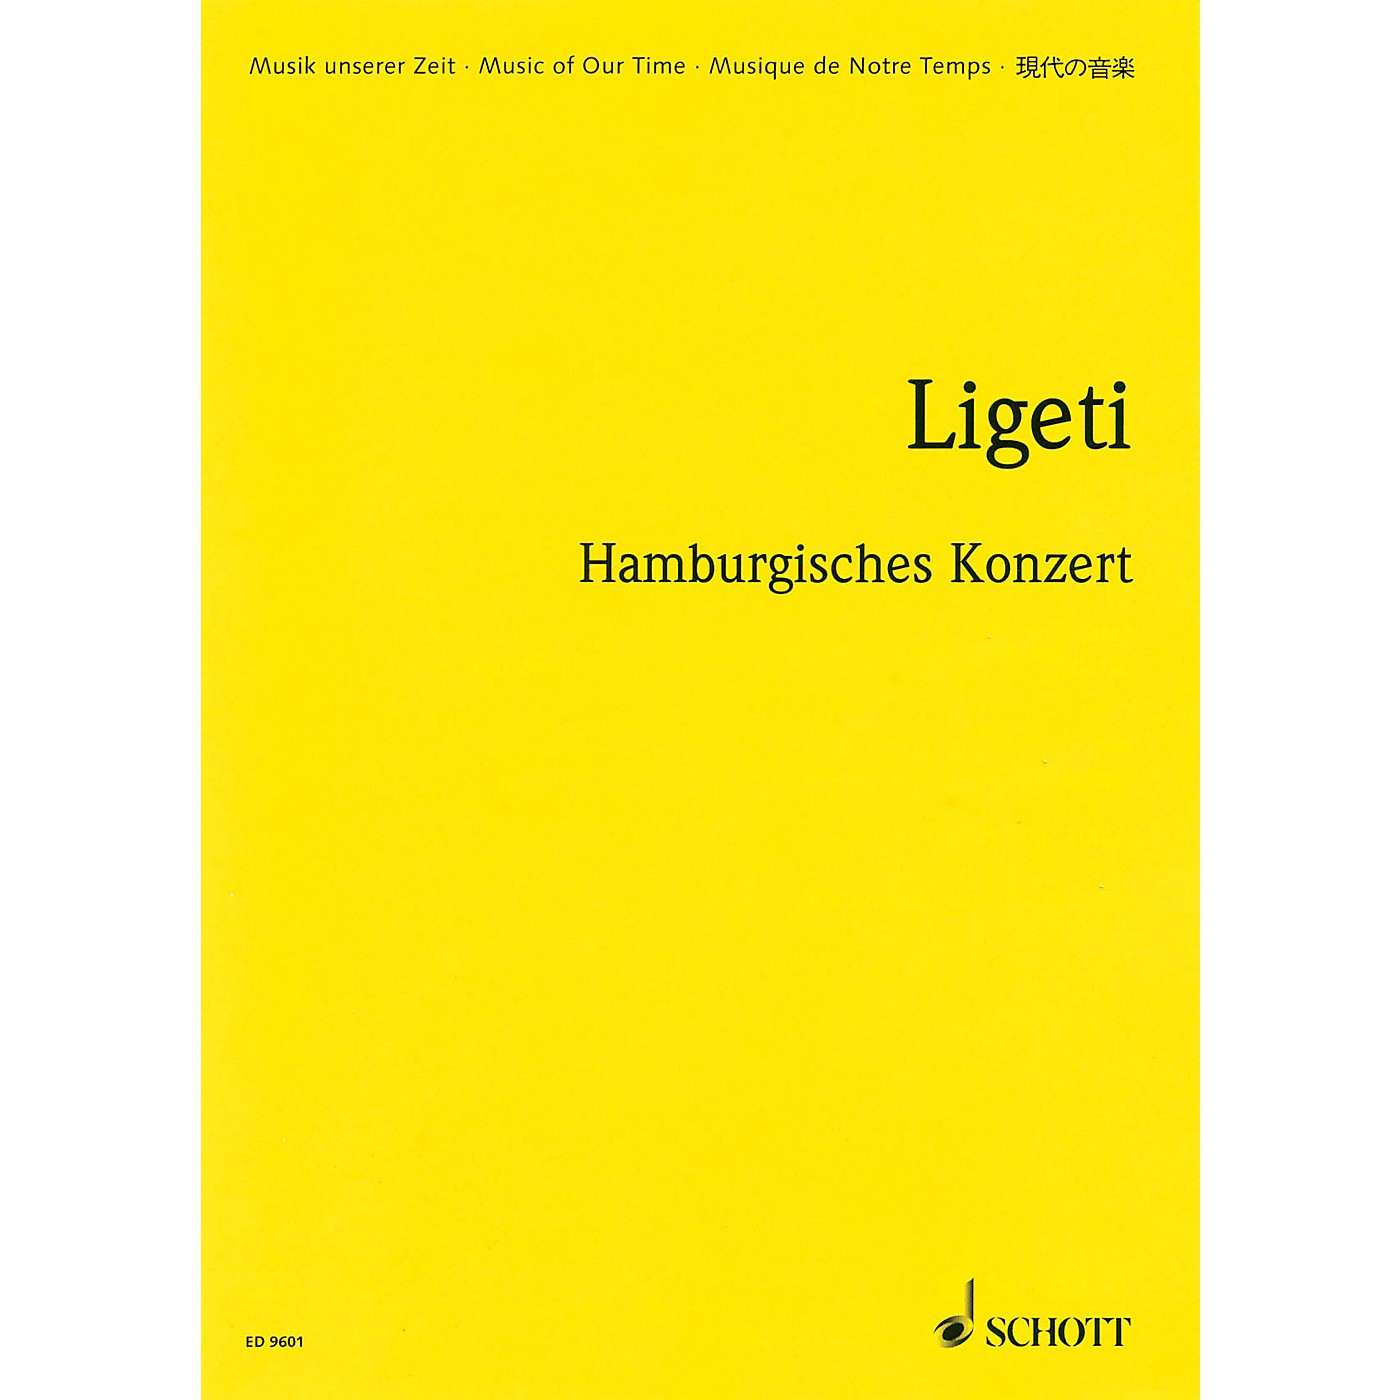 Schott Hamburgisches Konzert (Hamburg Concerto) (1998-99. 2002) (Study Score) Schott Series by György Ligeti thumbnail